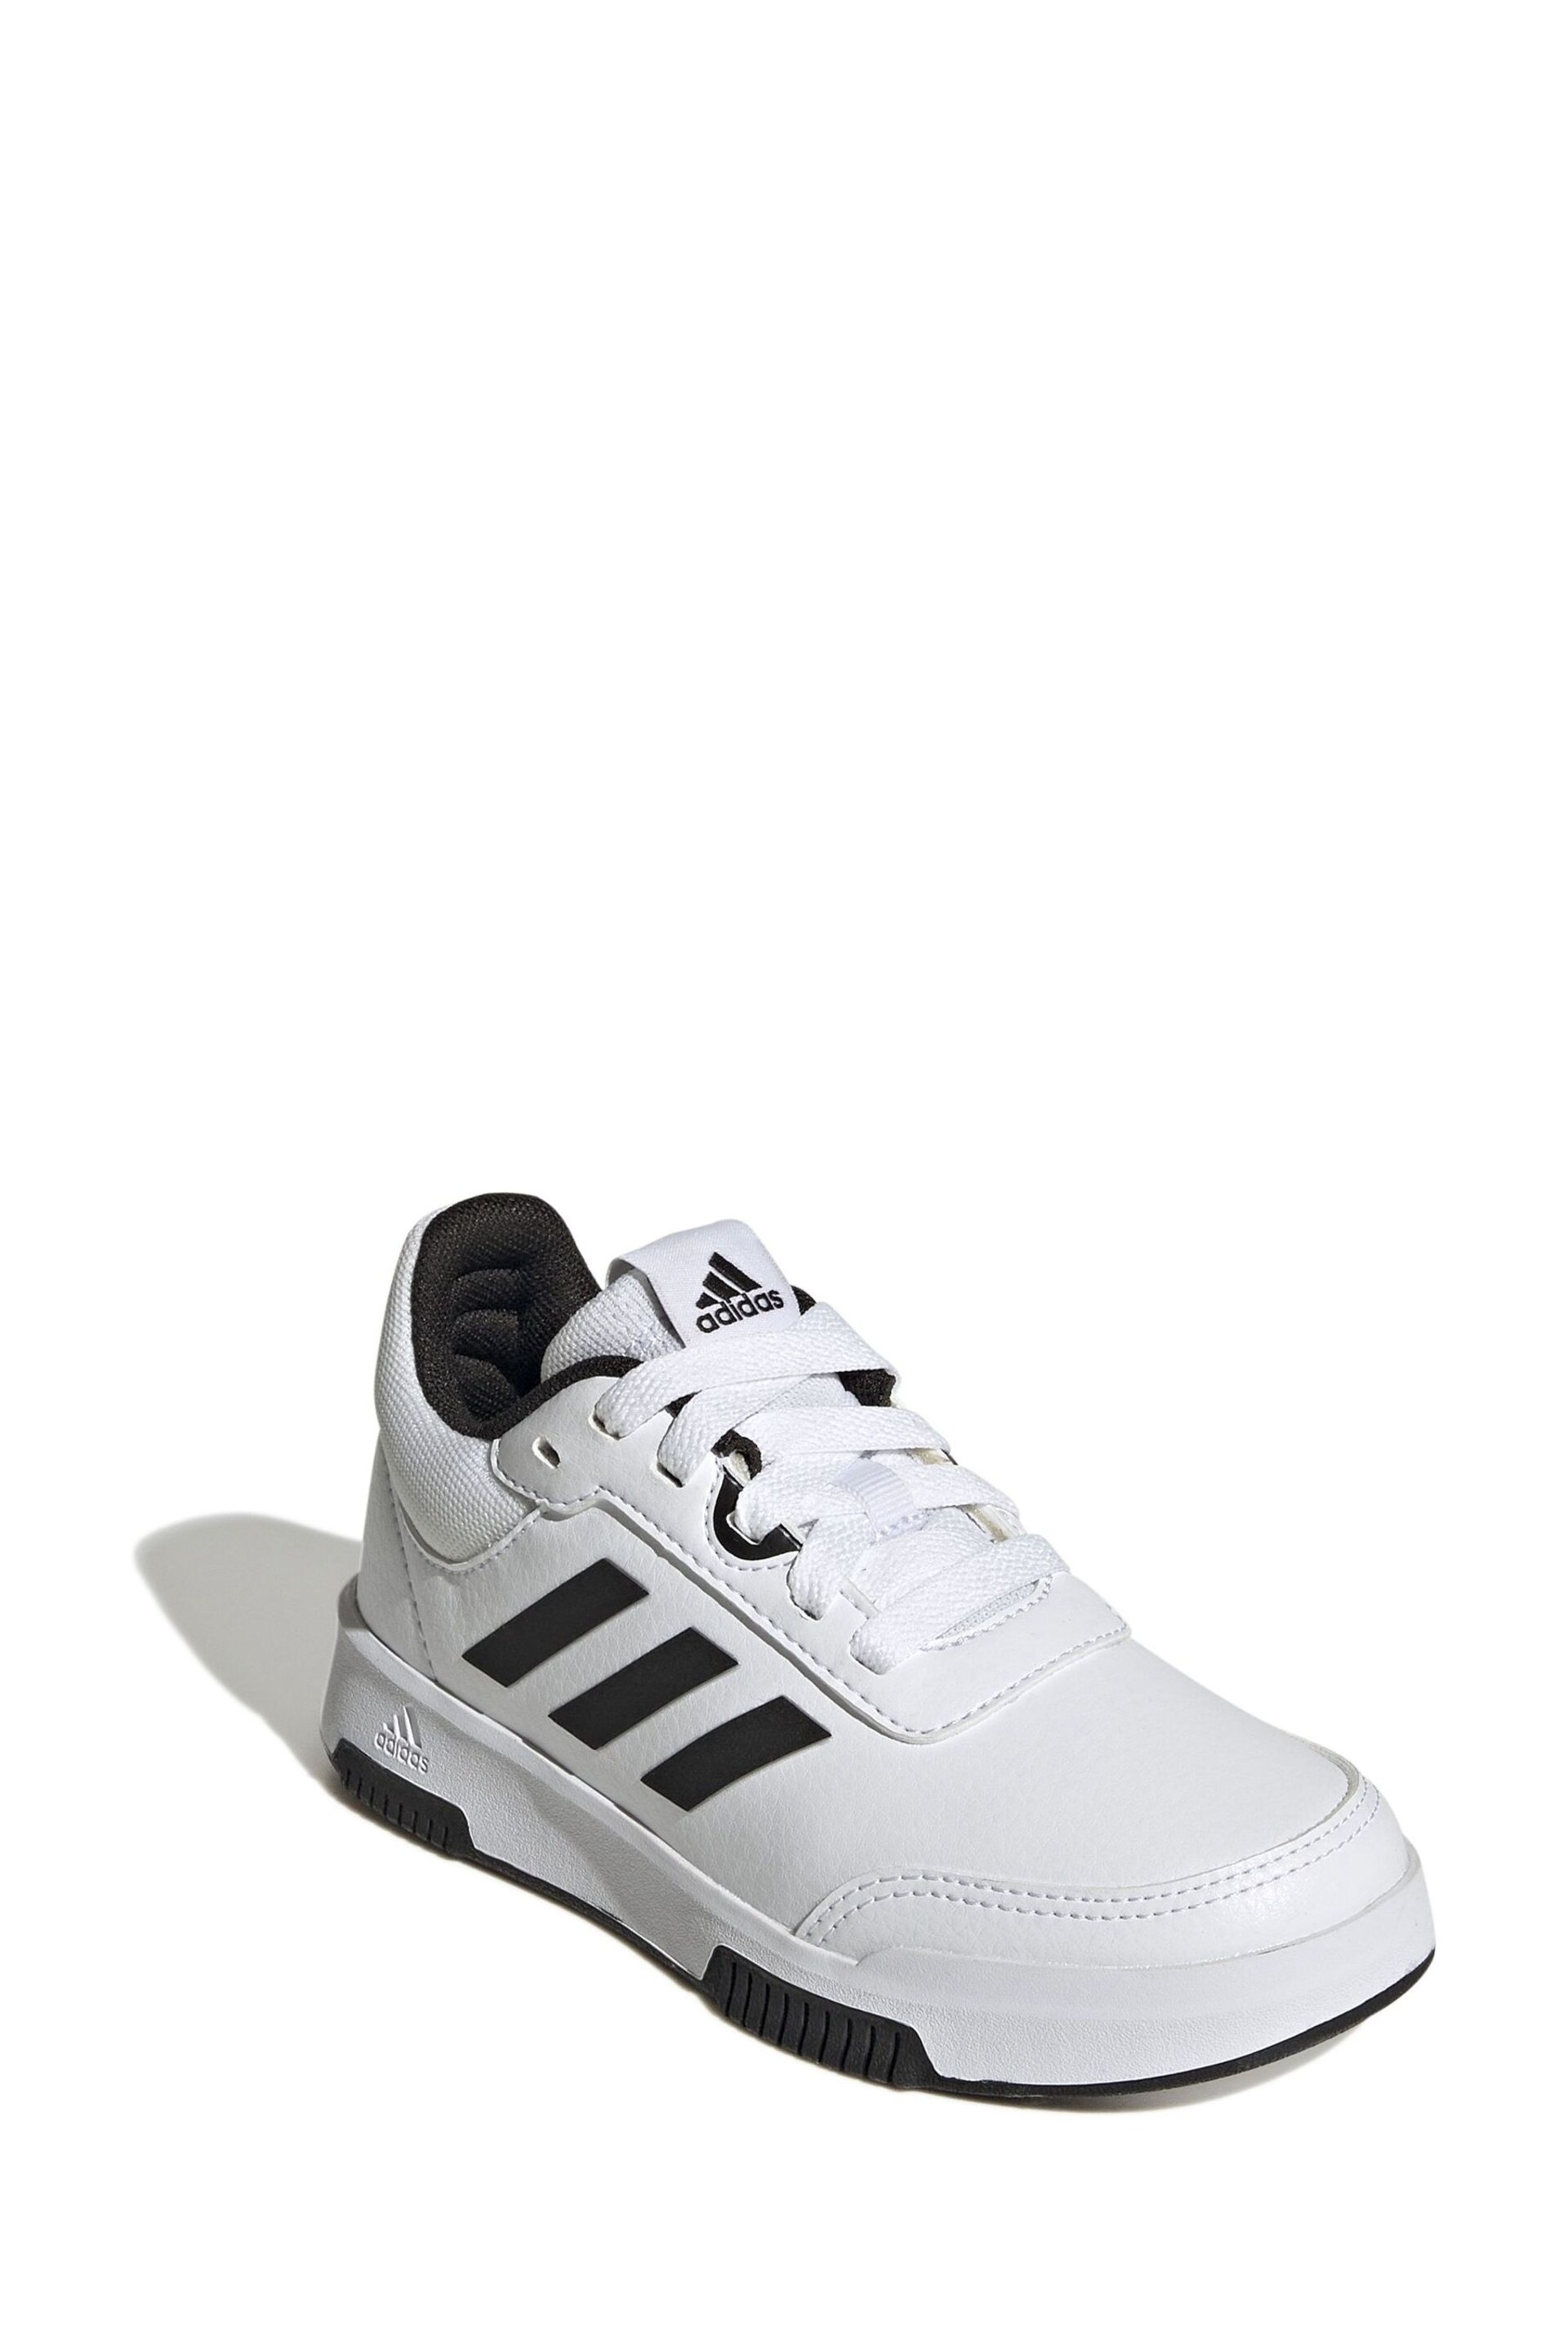 adidas White/Black Tensaur Sport Training Lace Shoes - Image 3 of 8